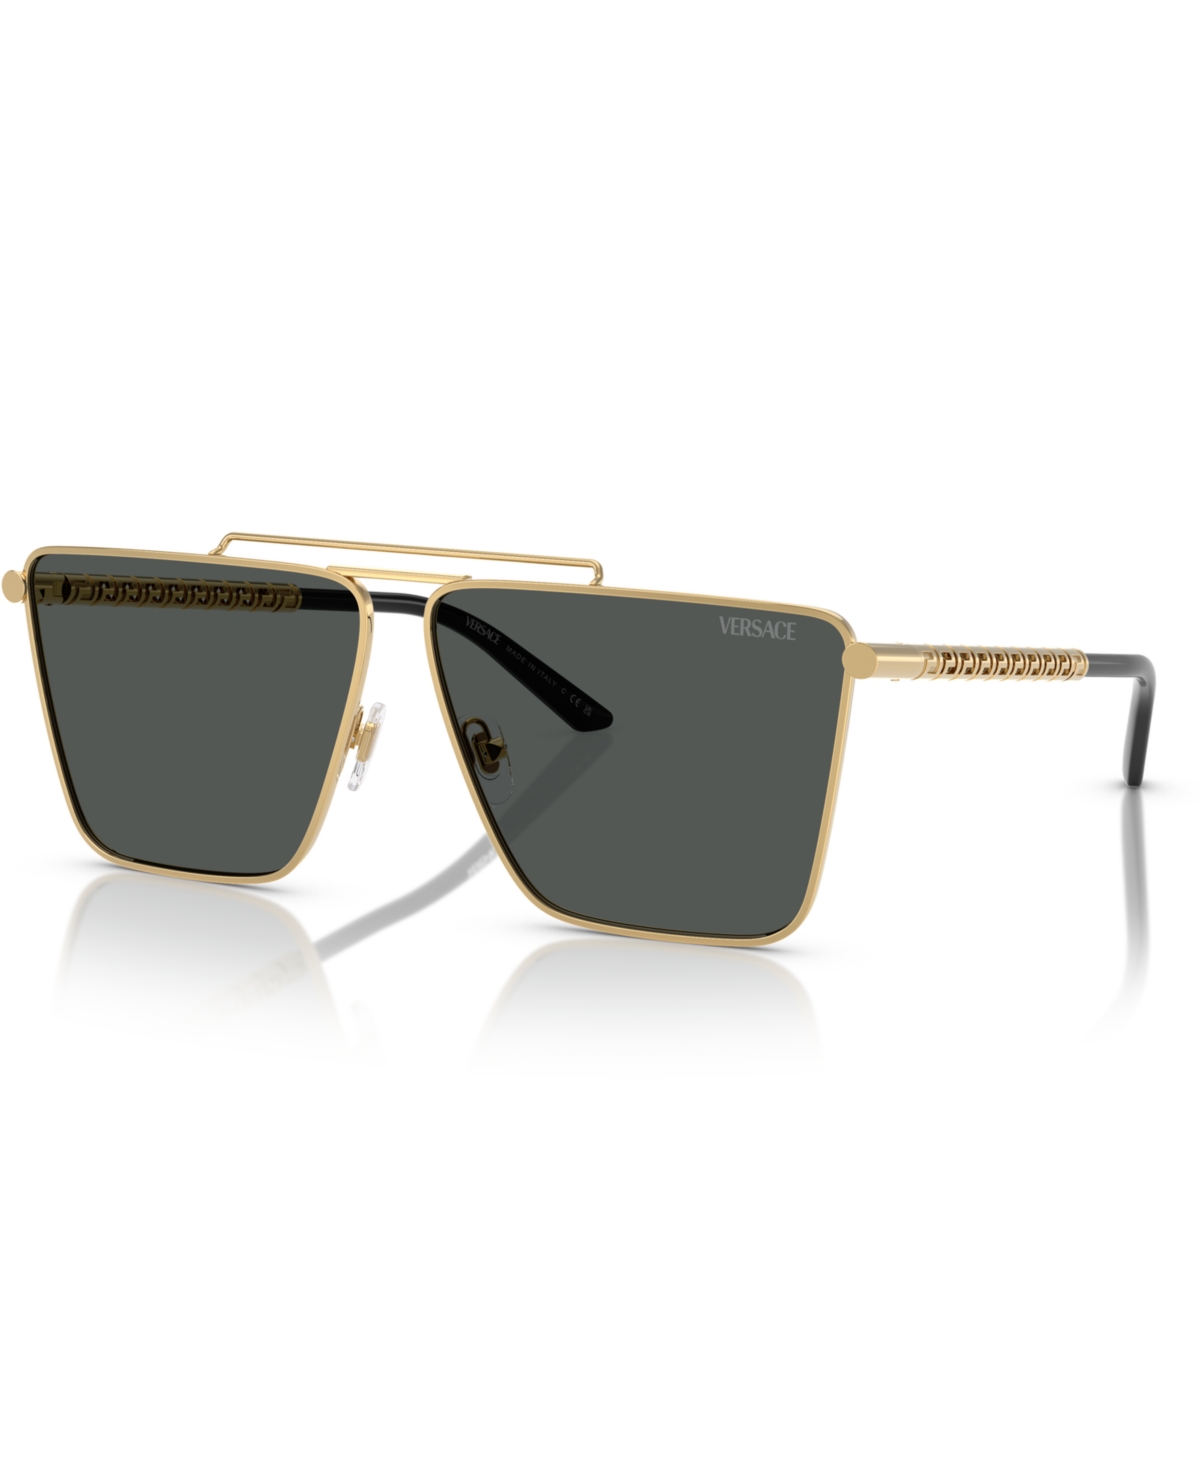 Men's Sunglasses, Ve2266 - Gold, Silver